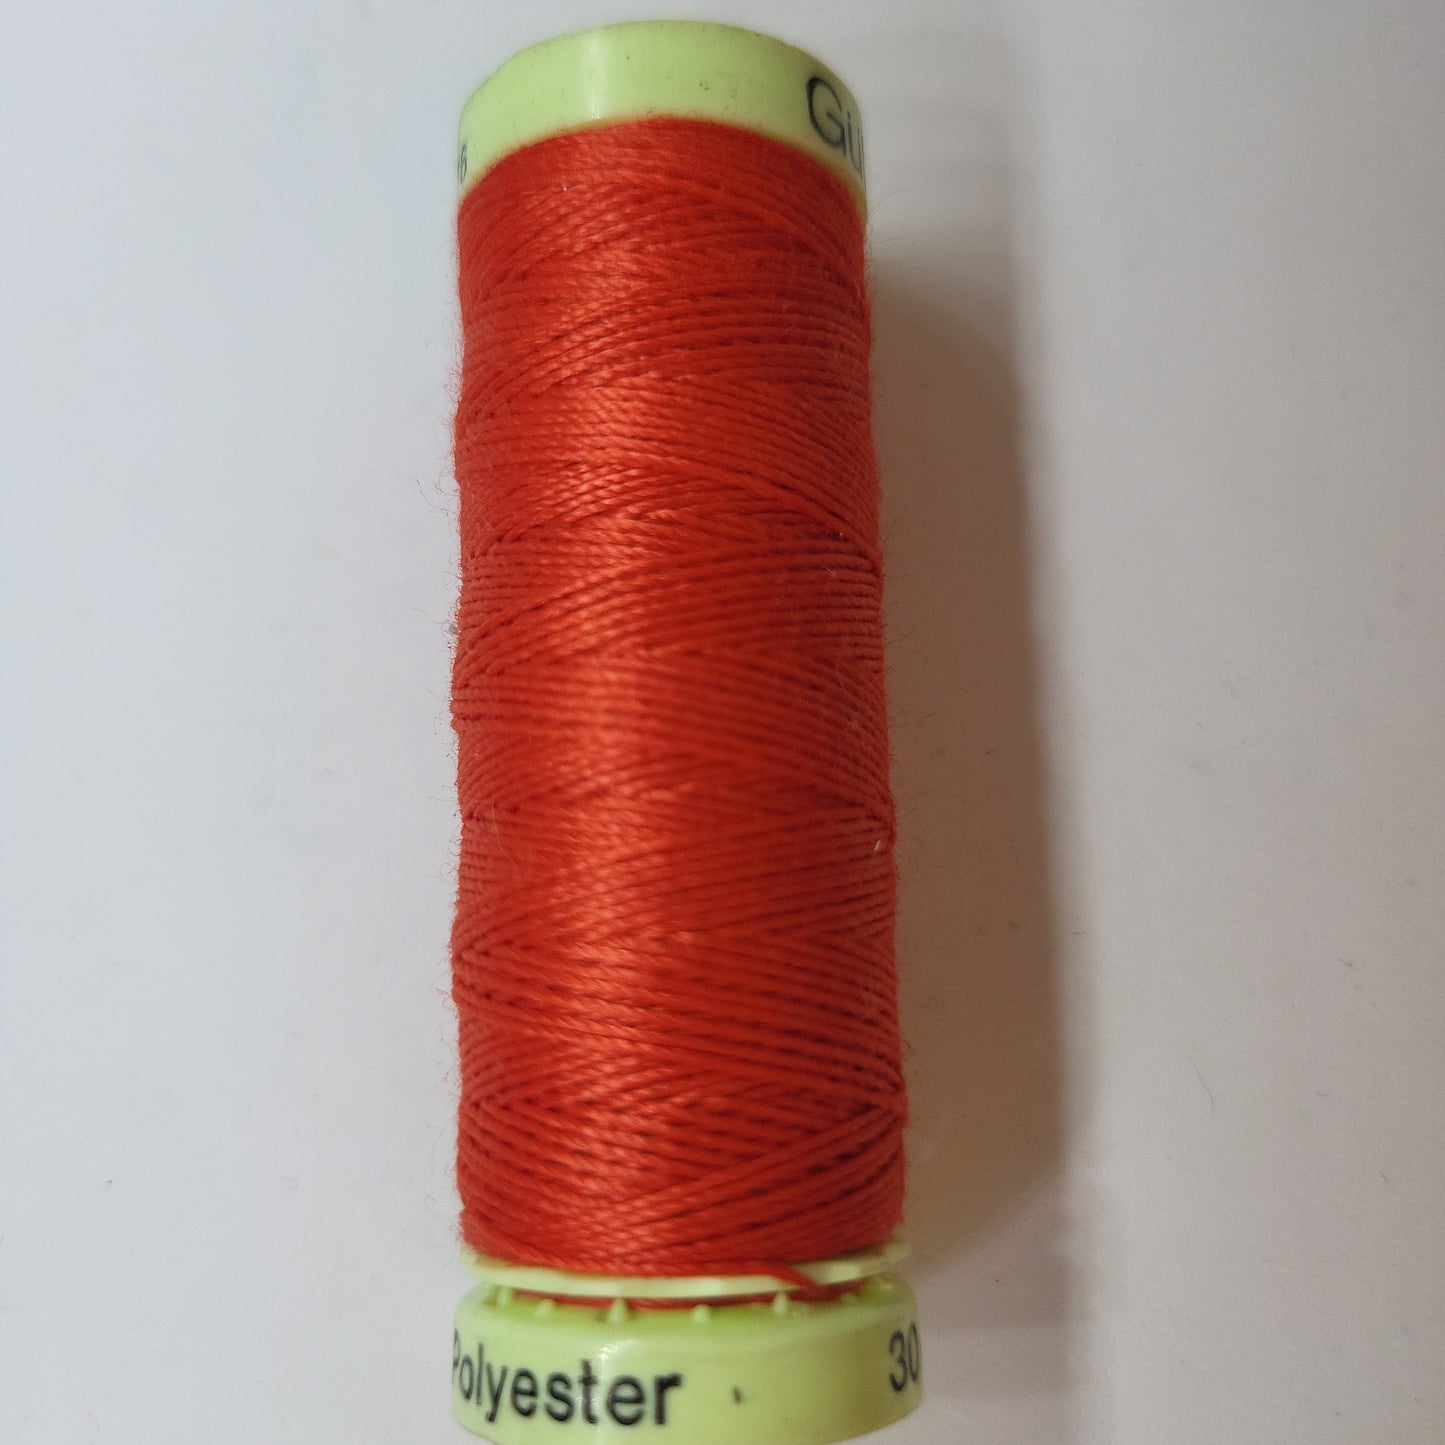 364 Top Stitch Thread